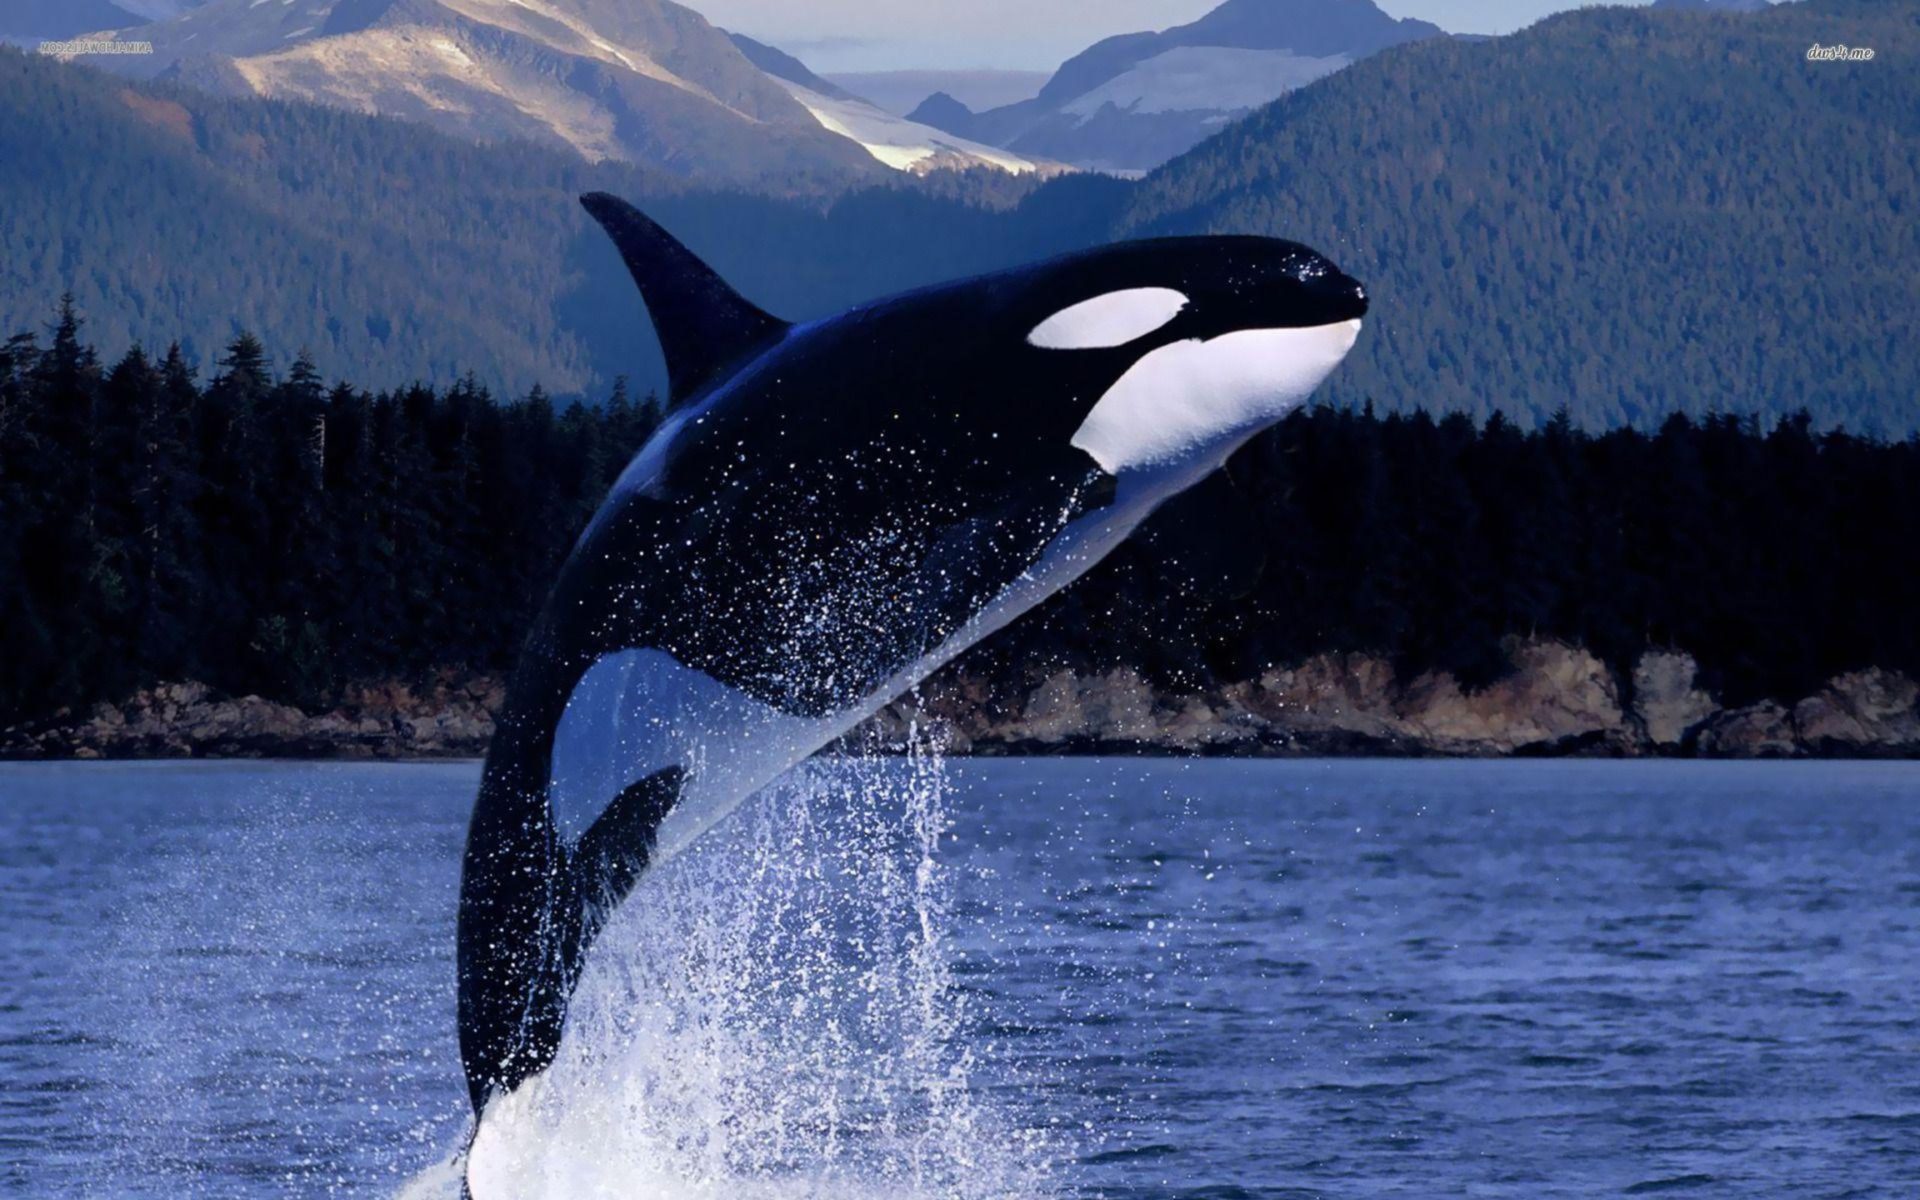 native Onvoorziene omstandigheden ONWAAR Killer Whales - The Most Powerful Predators on the Planet - MyStart